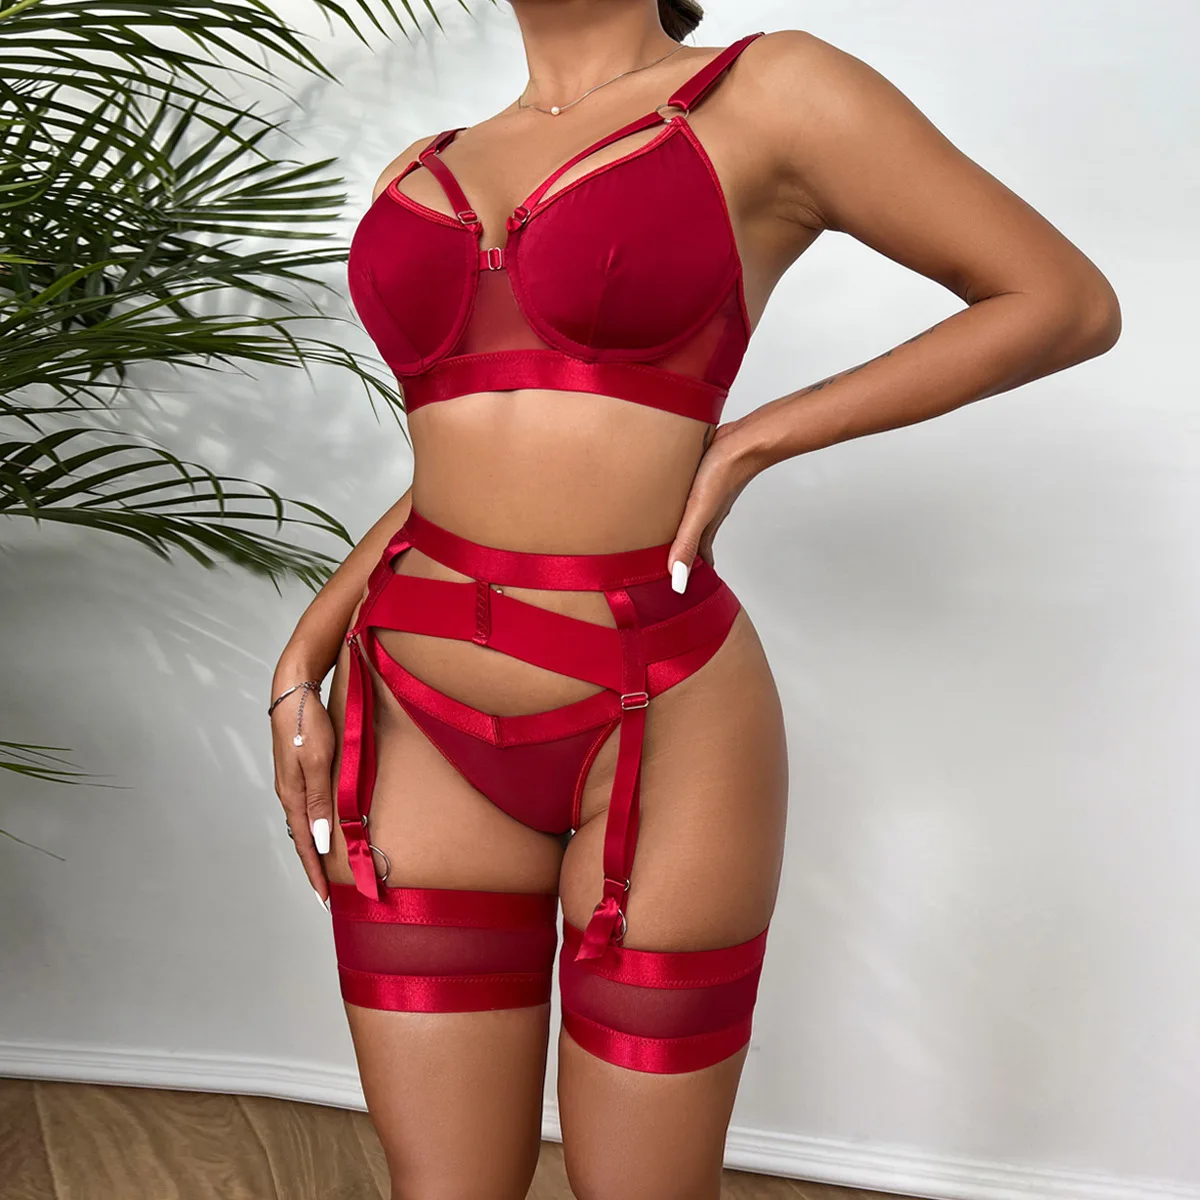 

Women's Sexy Lingerie Cutout Lace Briefs Garter Belt Underwire Bra Set Passion Pure Lust Midnight Glamor Flirting Clothing